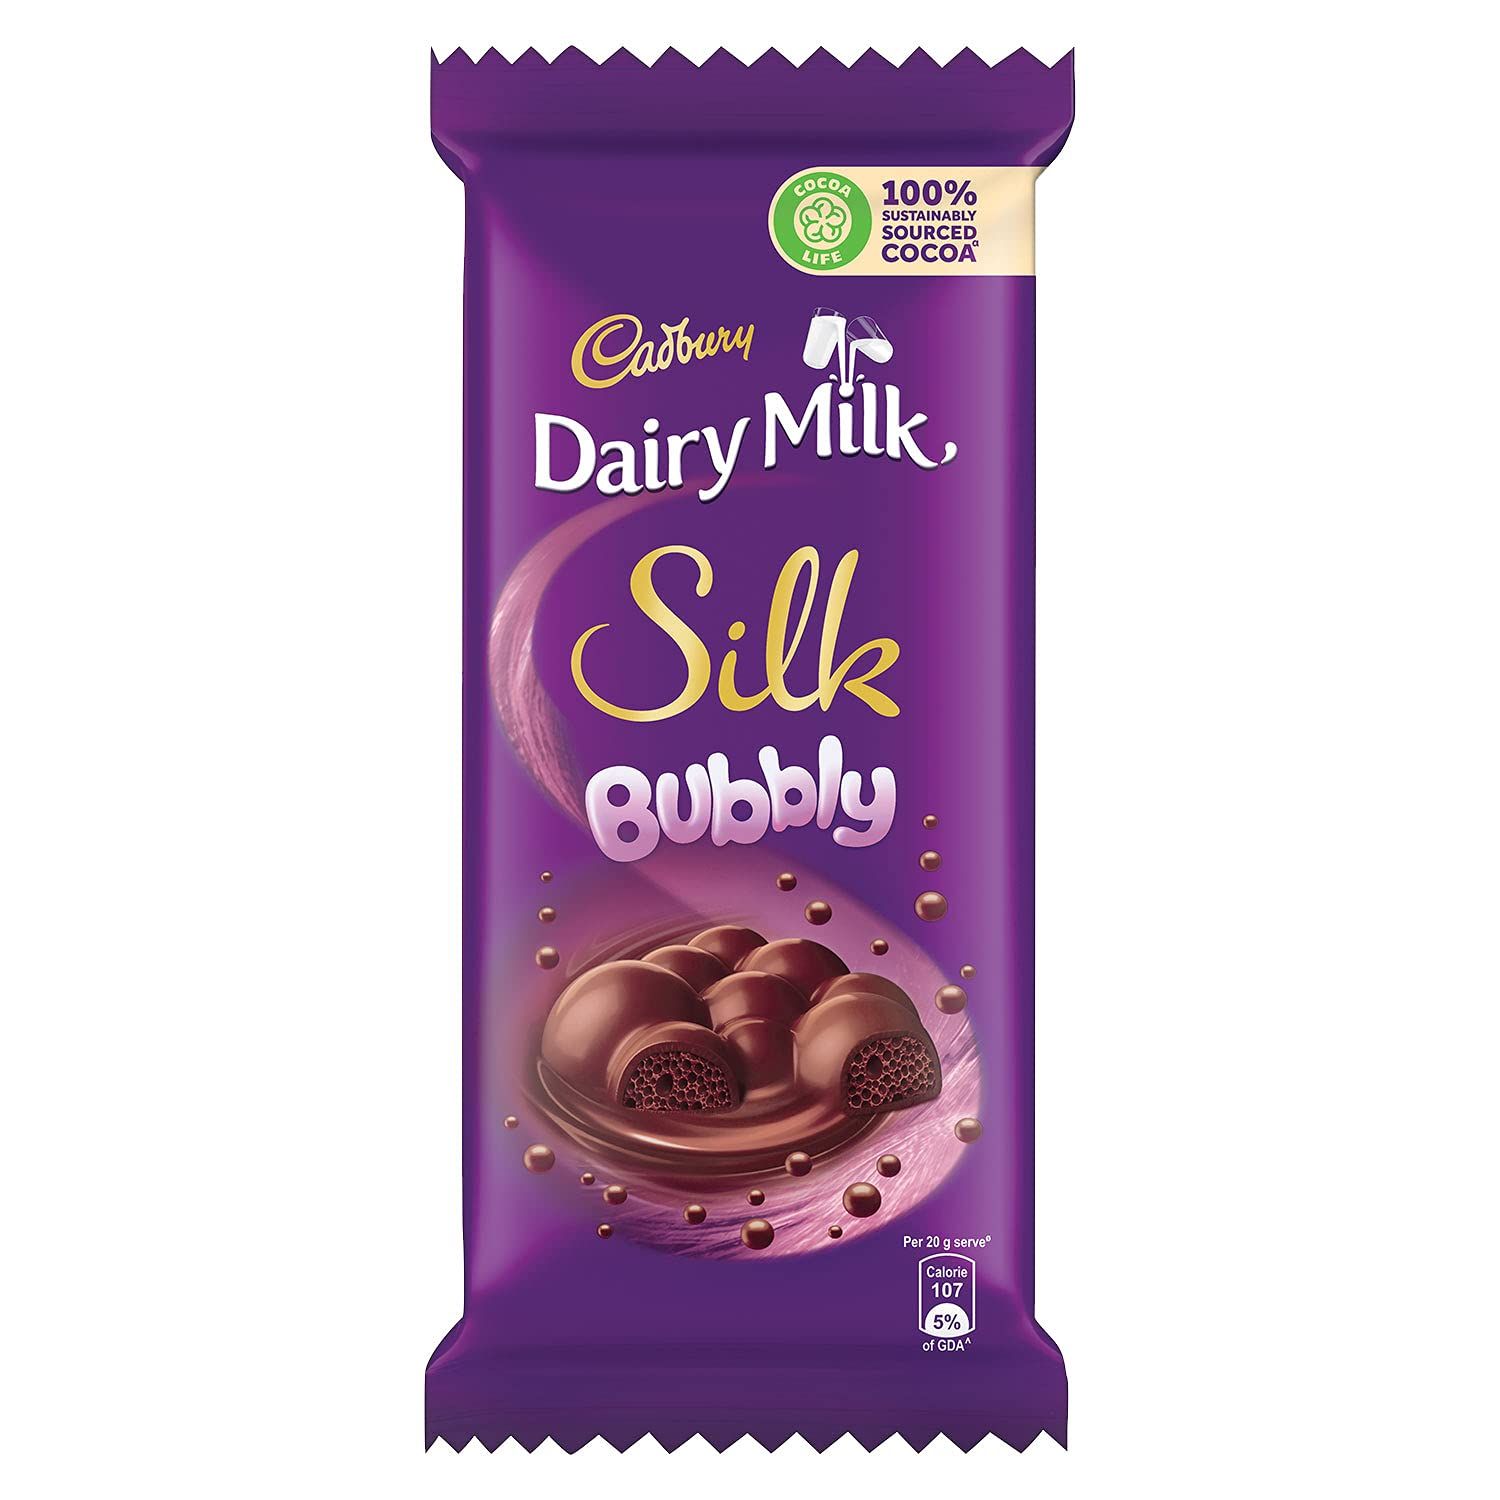 Cadbury Dairy Milk Silk Chocolate Bar Bubbly Image